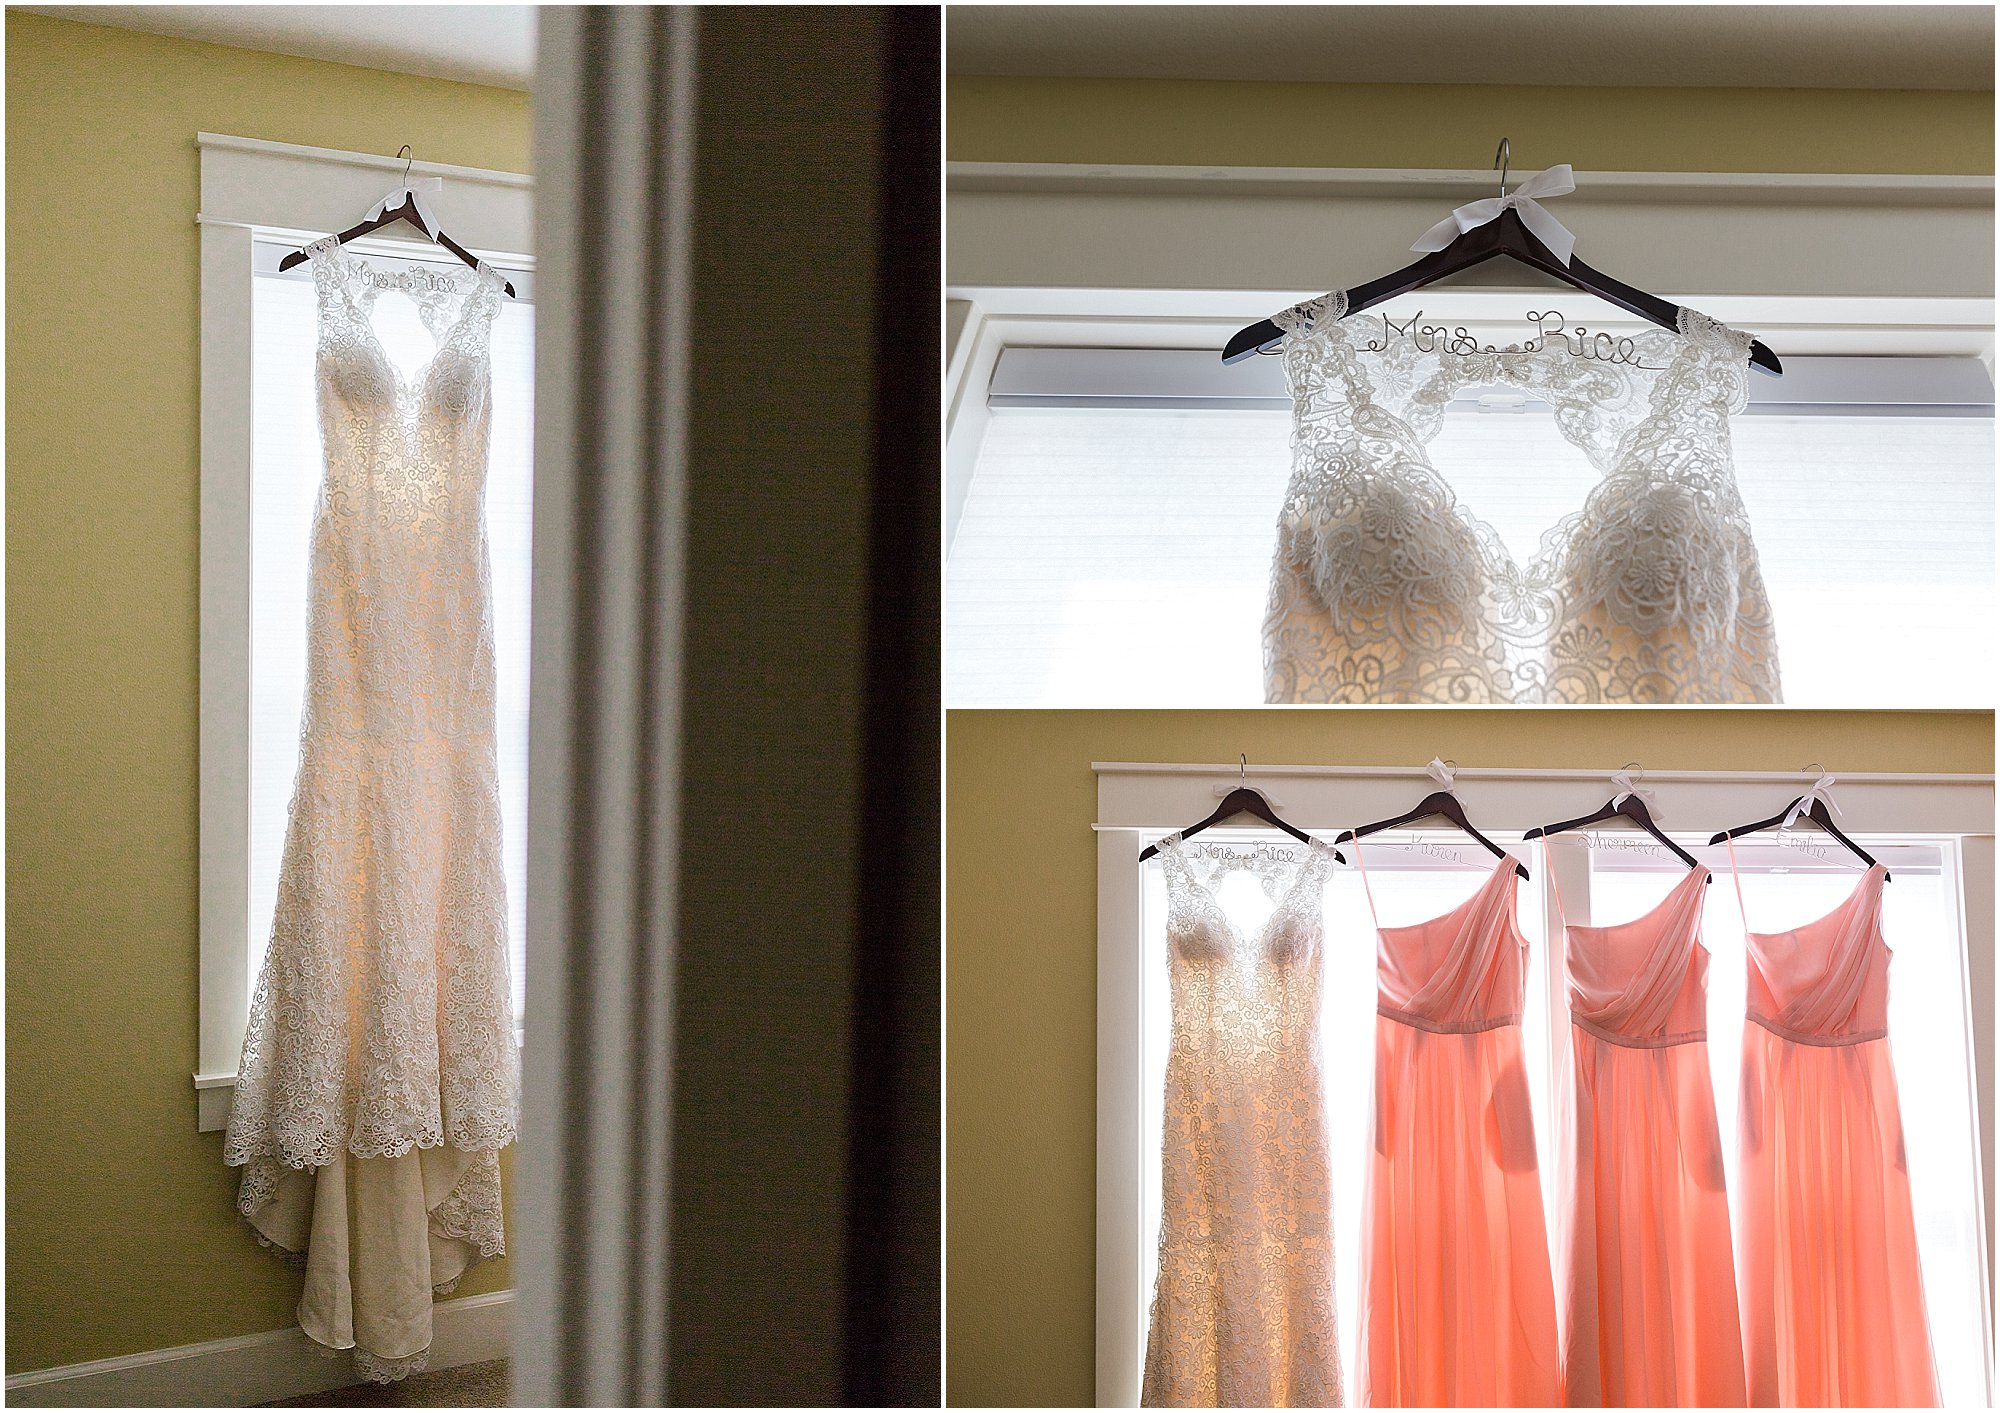 Deschutes Brewery Wedding bride's wedding dress and bridesmaid dresses in window. | Erica Swantek Photography